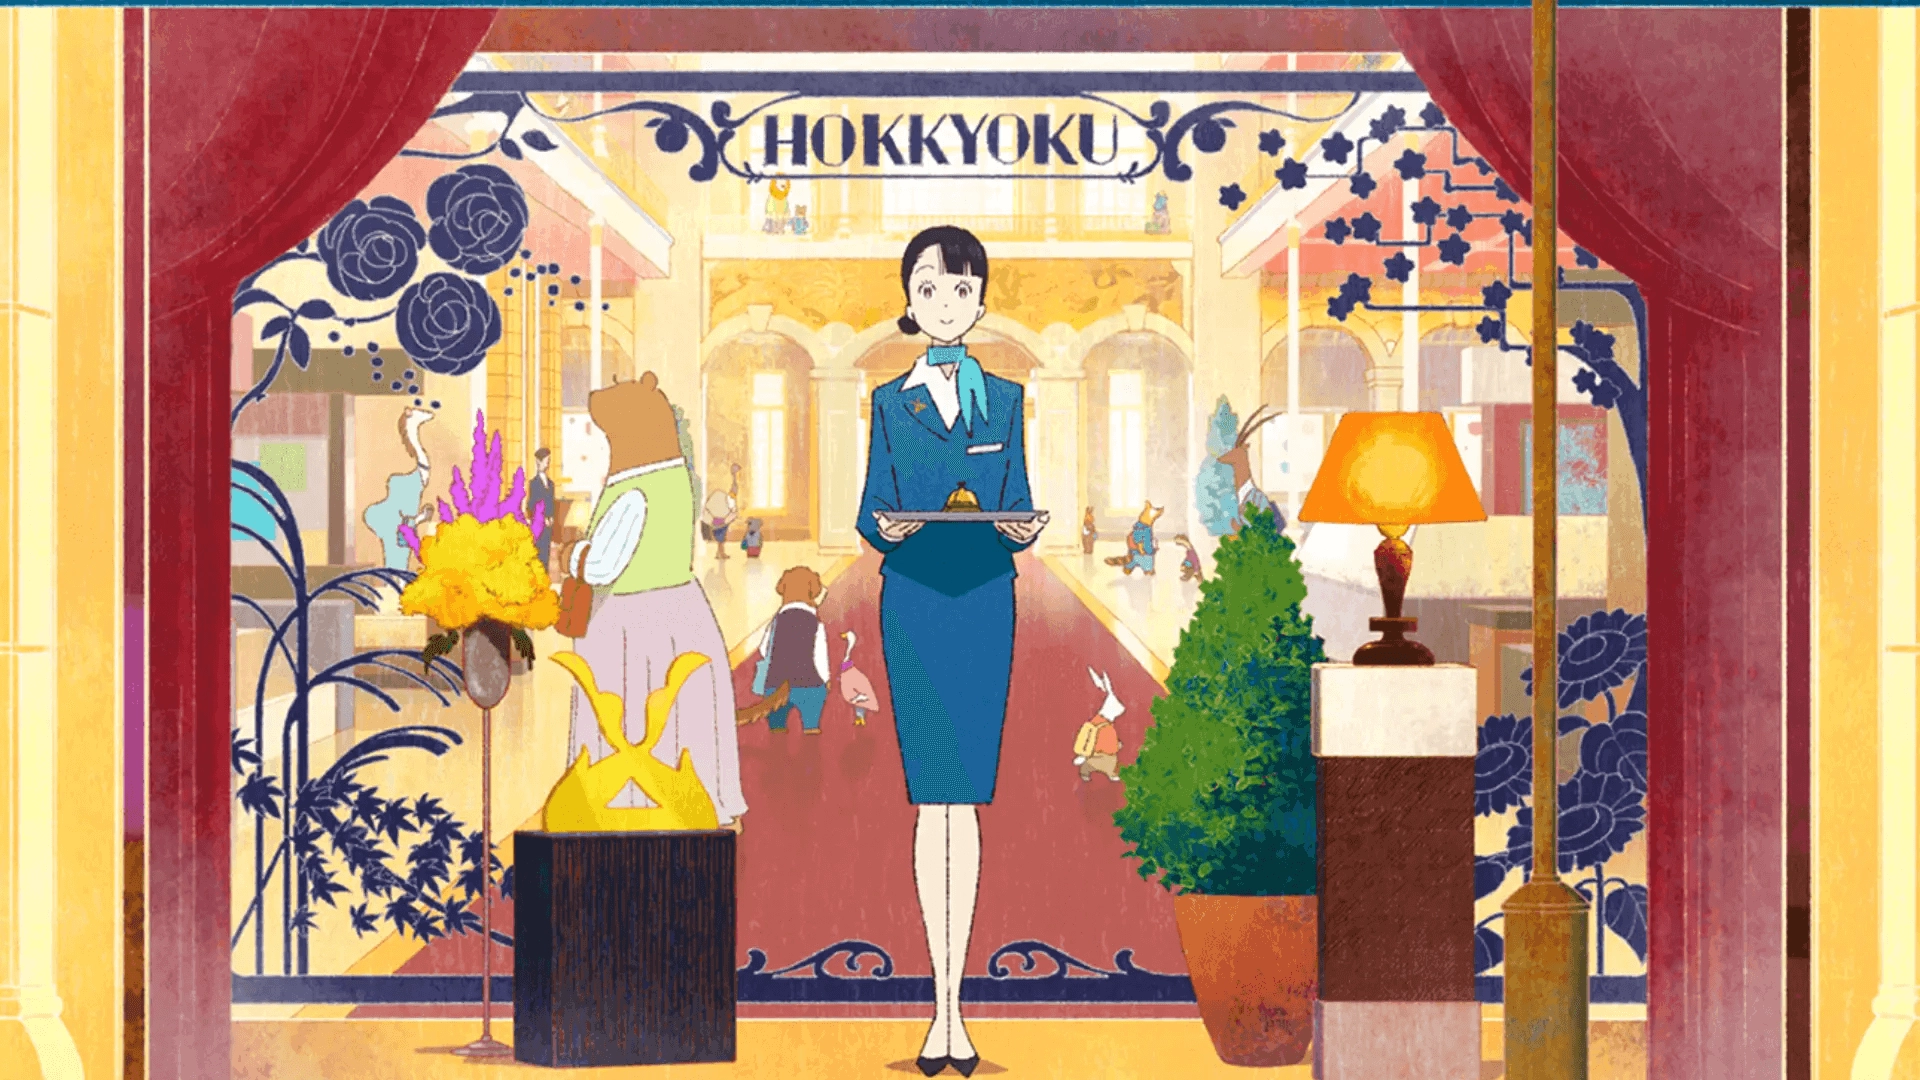 Hokkyoku Hyakkaten no Concierge-san: La próxima película de Production I.G